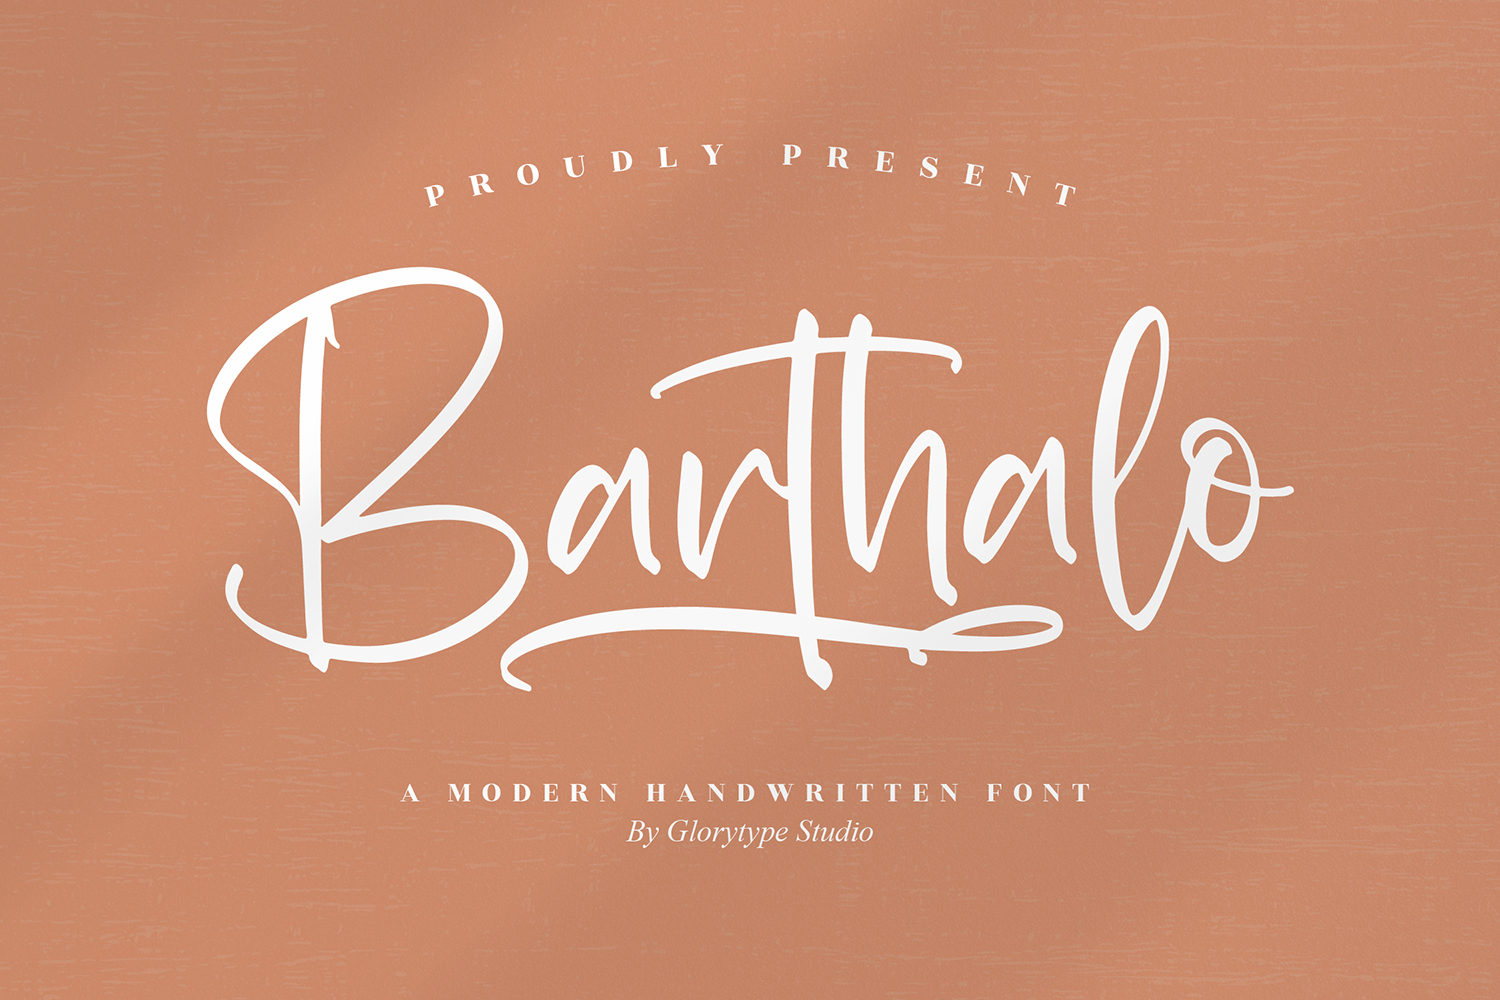 Barthalo Free Font